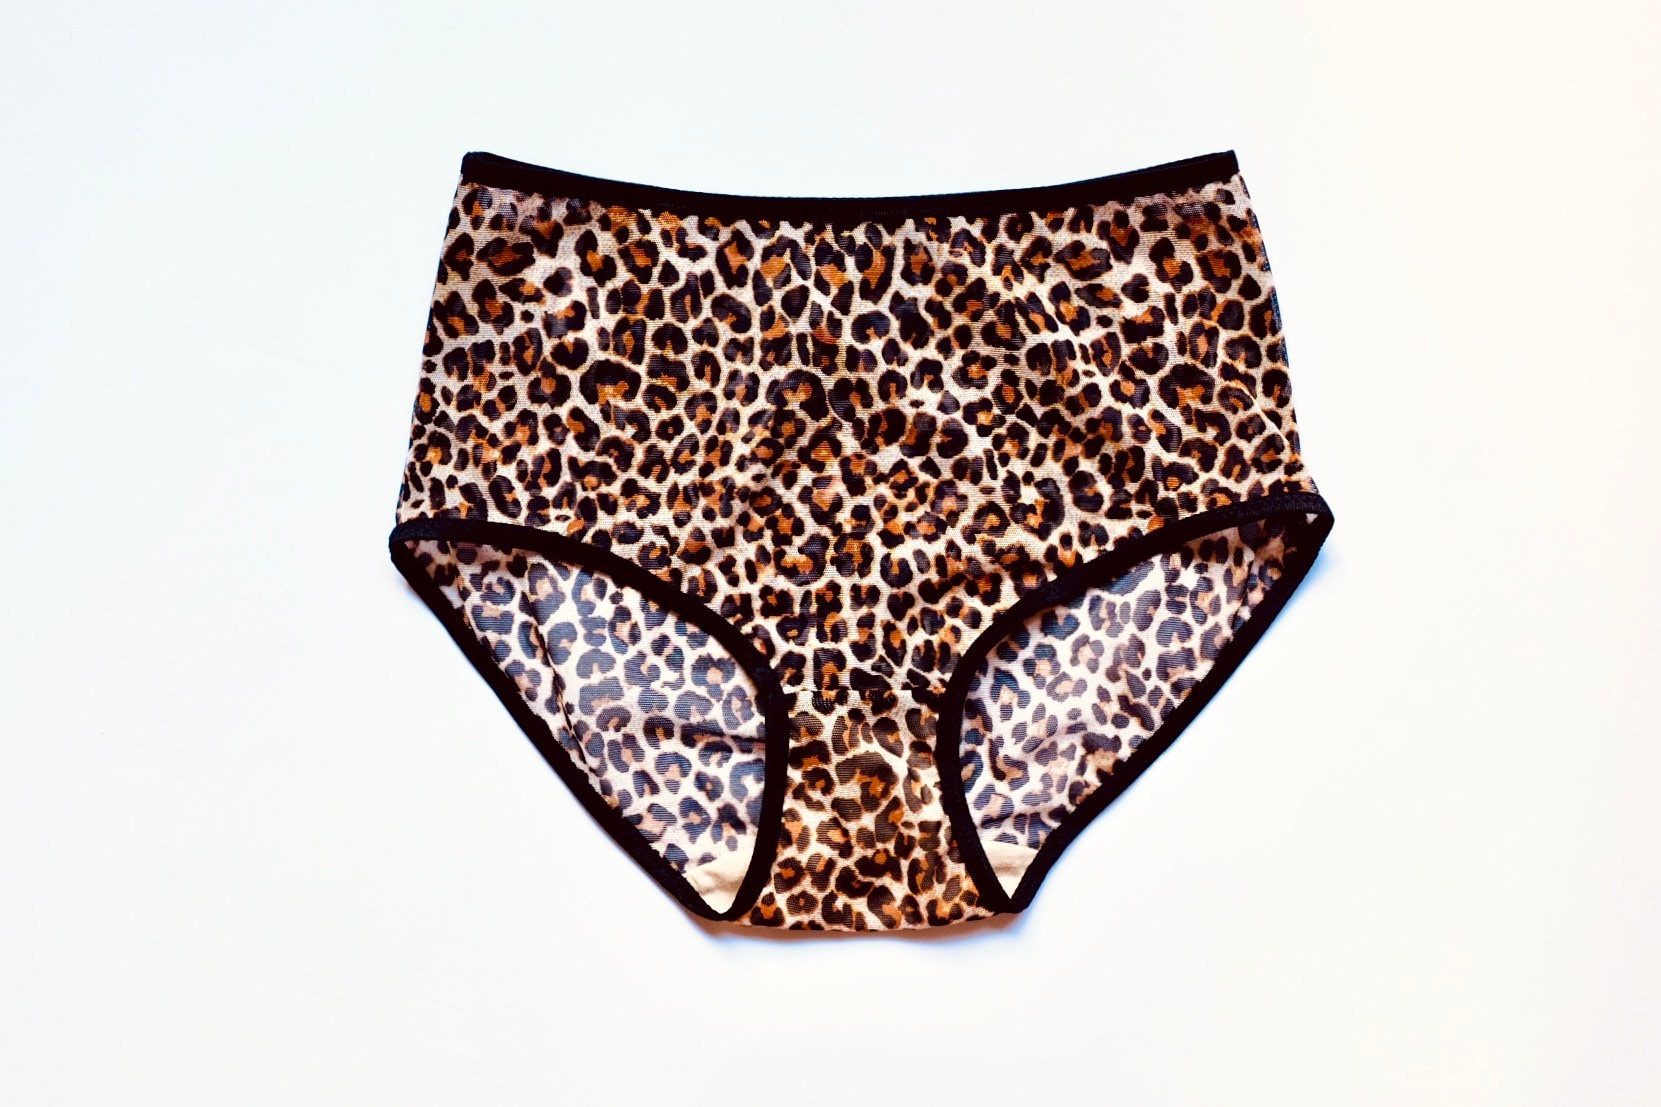 Hipster Panties in Sheer Mesh With Black Trim. Leopard Print Panties. Women's  Lingerie. Romantic Gift. Handmade to Order 